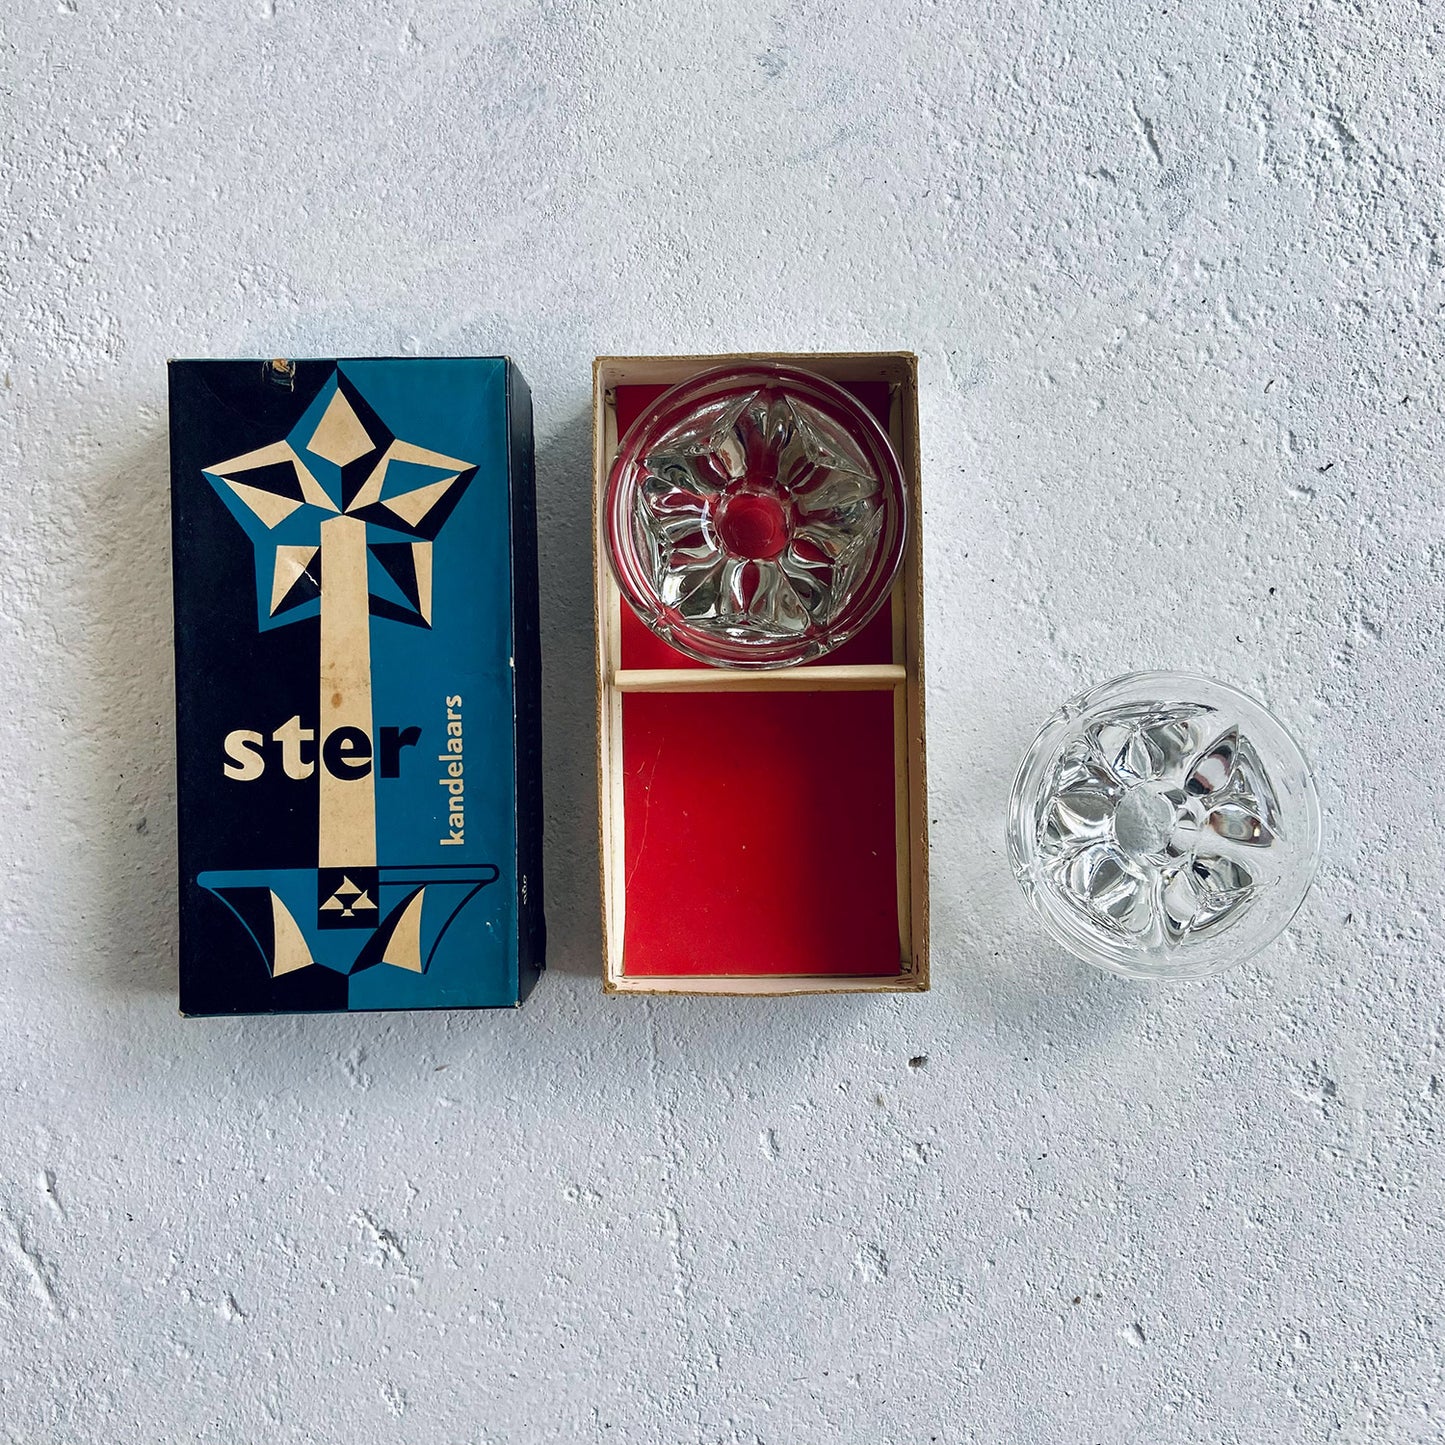 Royal Leerdam, Christmas set / 2x vintage glass (crystal) star-shaped candlestick-holders, The Netherlands, 1950s - 1960s